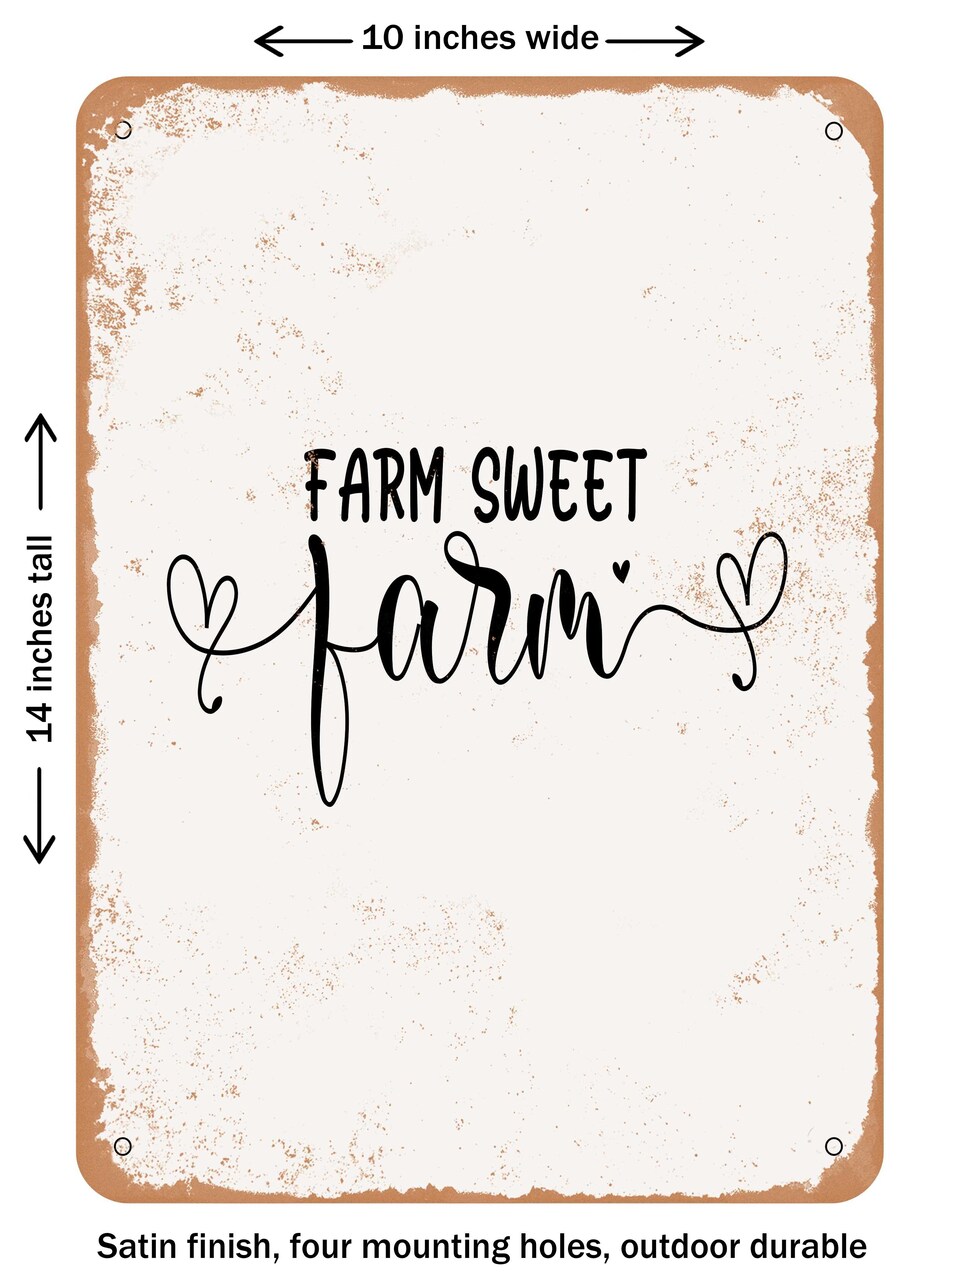 DECORATIVE METAL SIGN - Farm Sweet Farm - 3  - Vintage Rusty Look